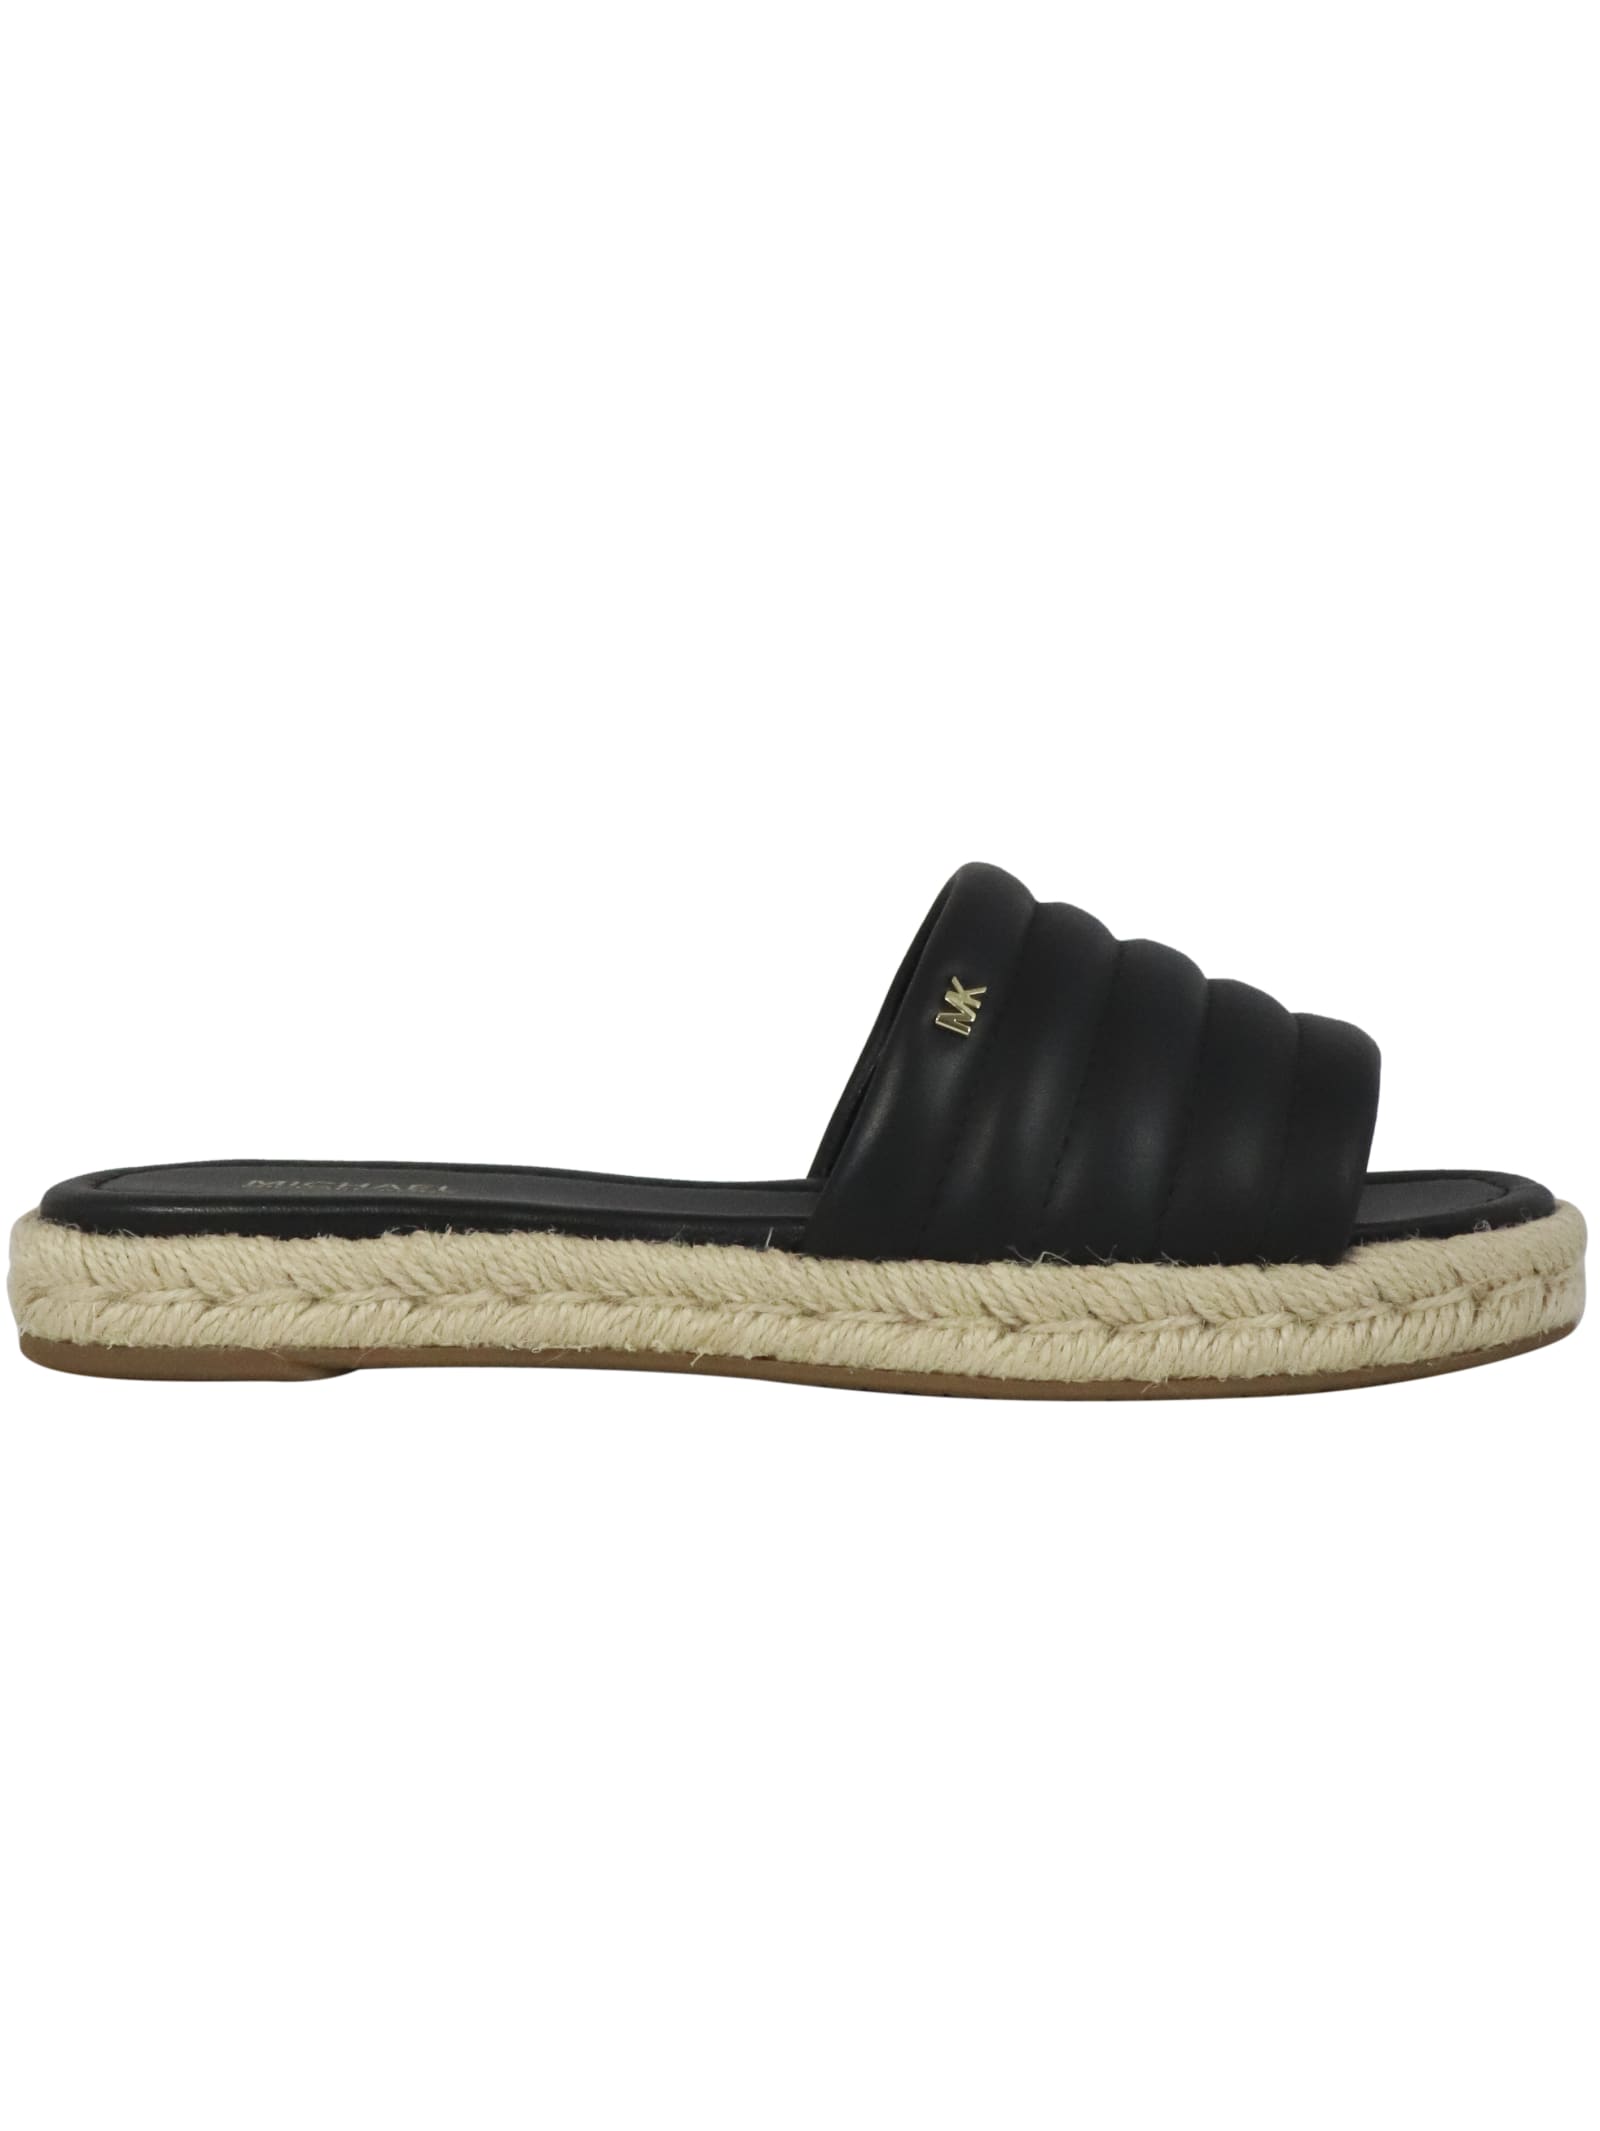 Buy Michael Kors Royce Slide Sandal online, shop Michael Kors shoes with free shipping